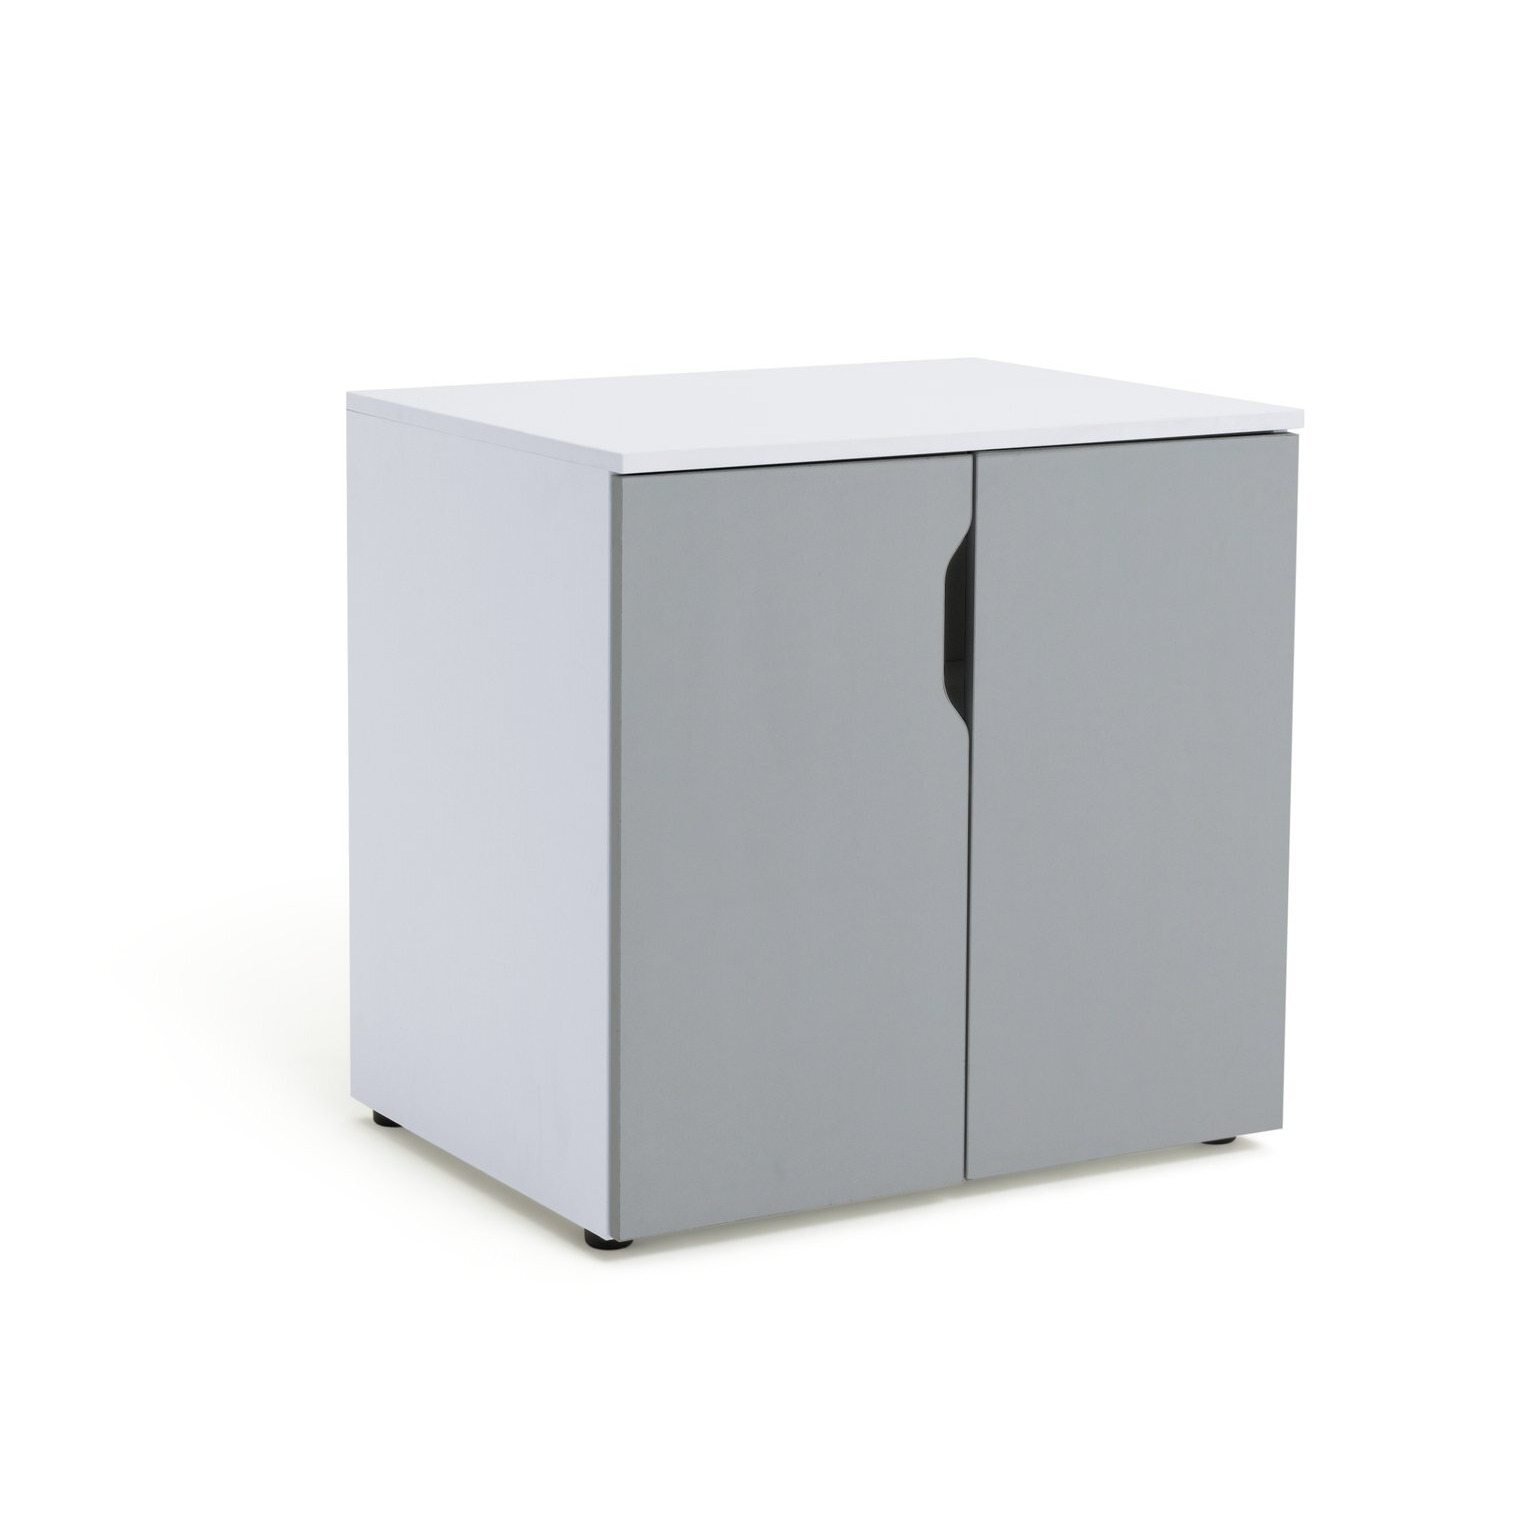 Habitat Pod 2 Door Cabinet - Grey - image 1